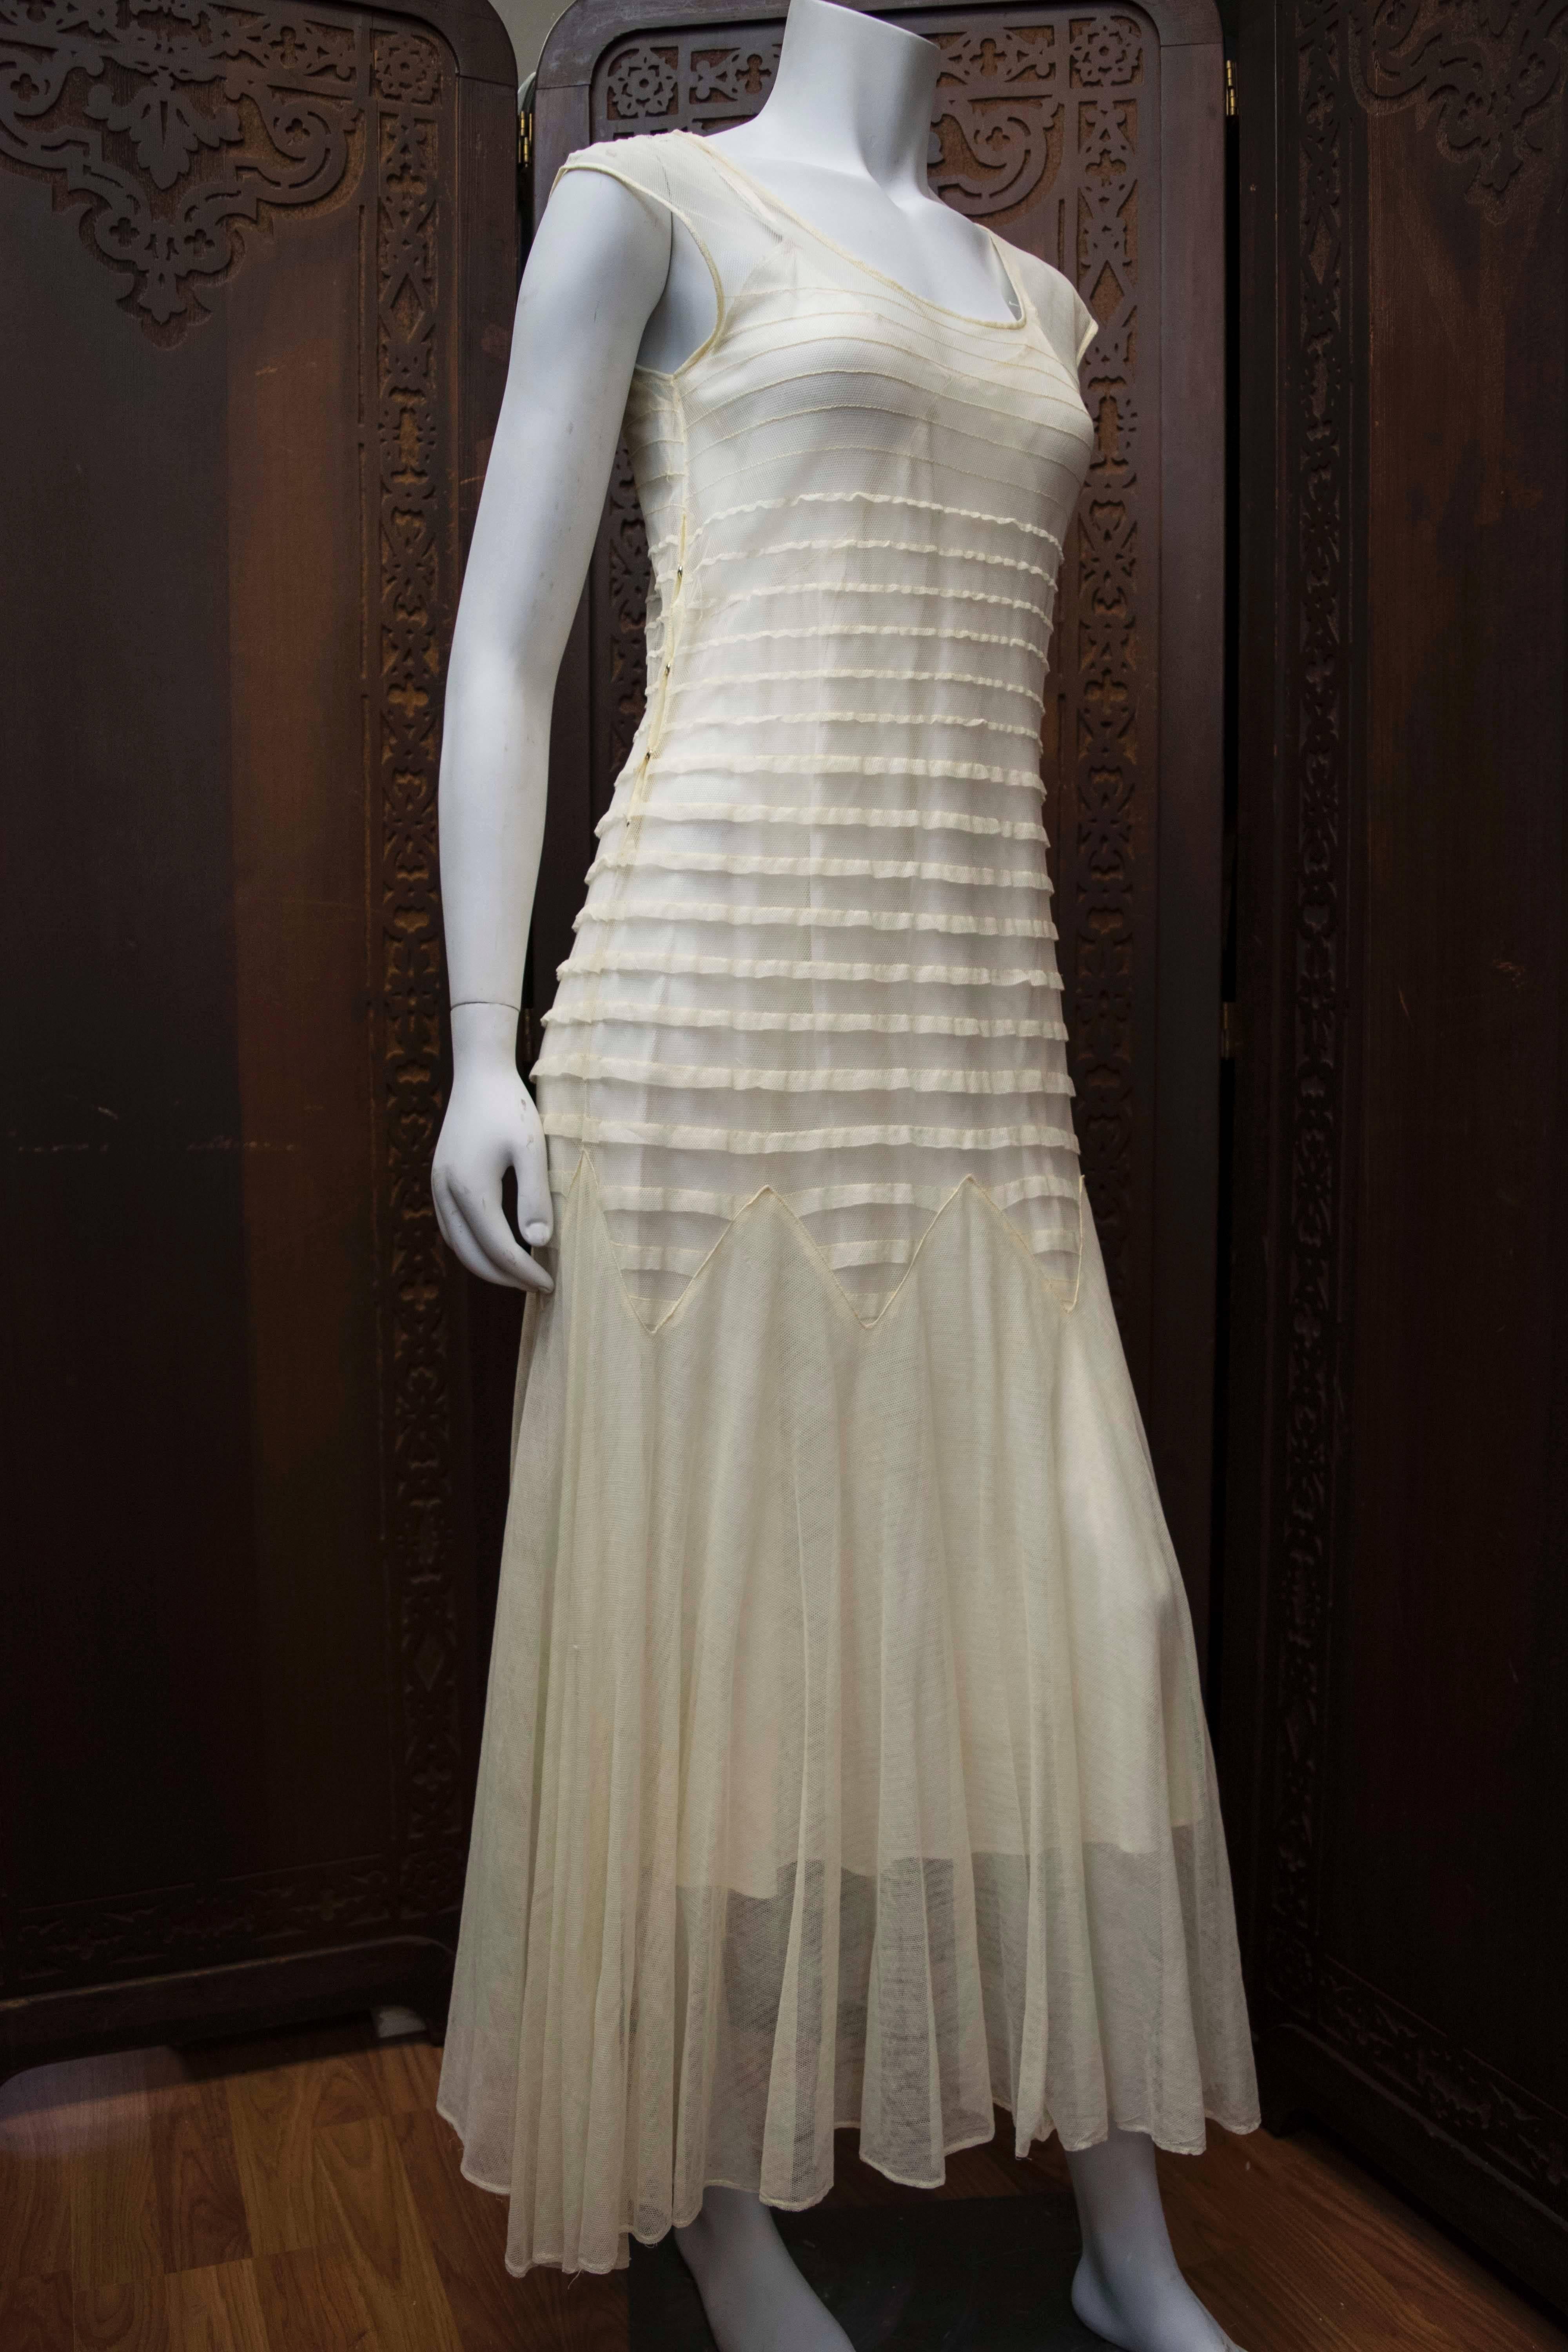 1930s Cream Lace Wedding Dress

B 34
W 30
H 40
L 54